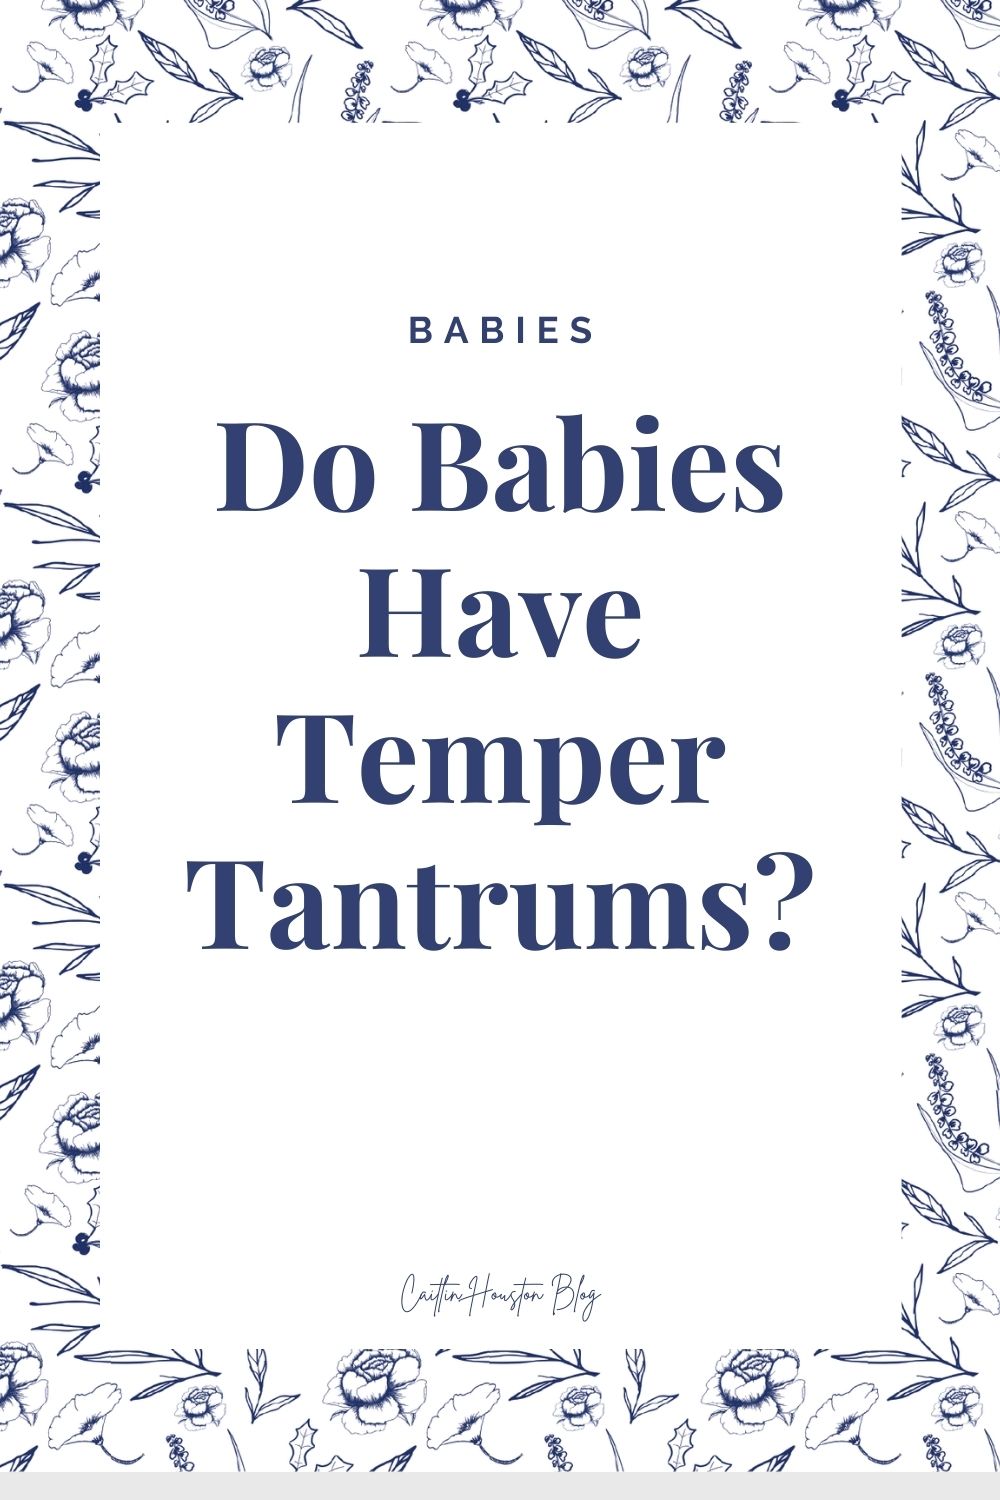 Baby Temper Tantrums